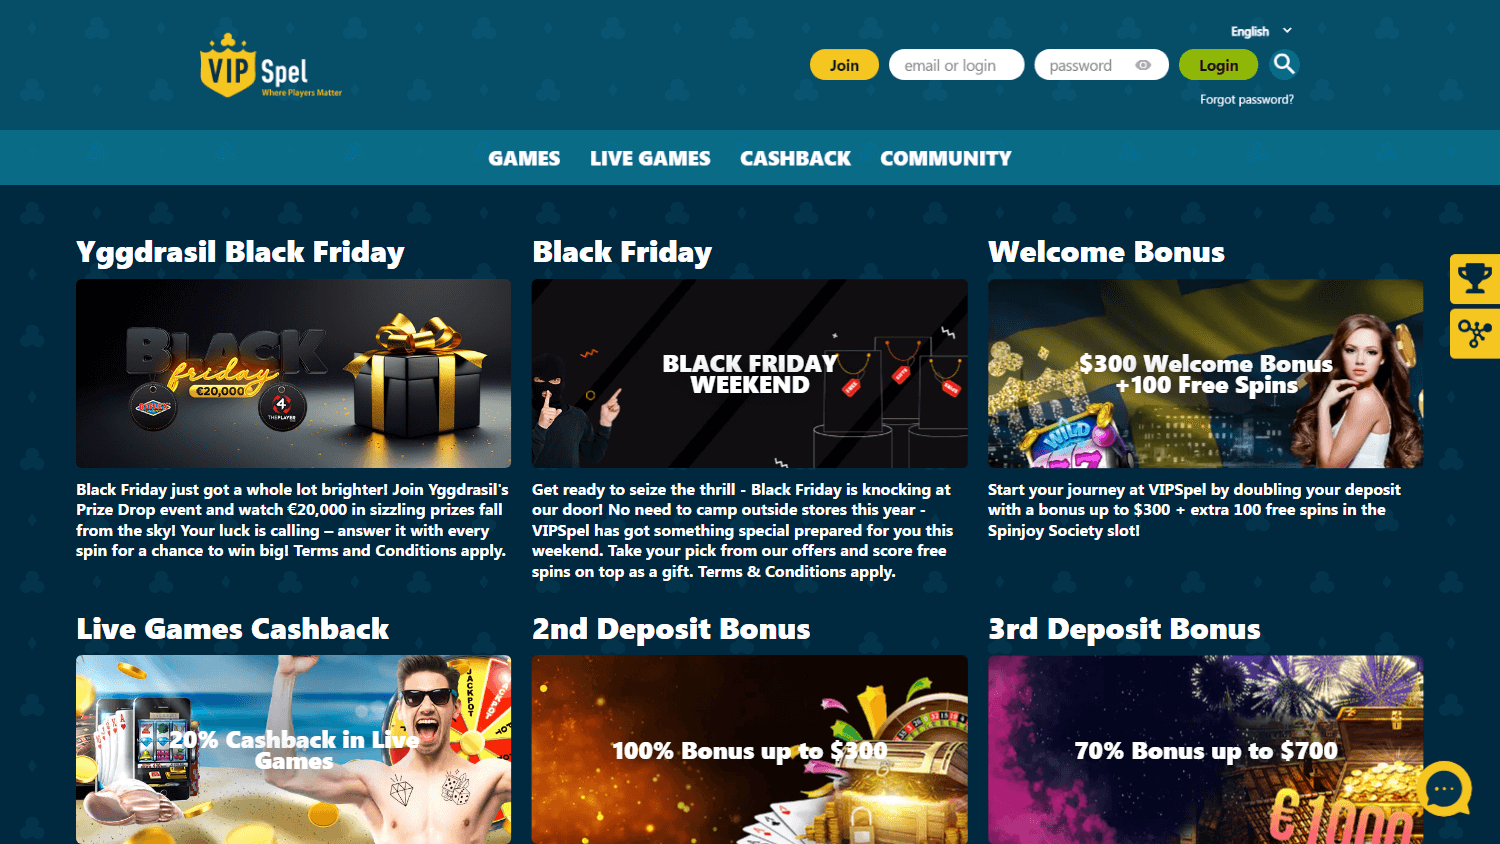 vip_spel_casino_promotions_desktop